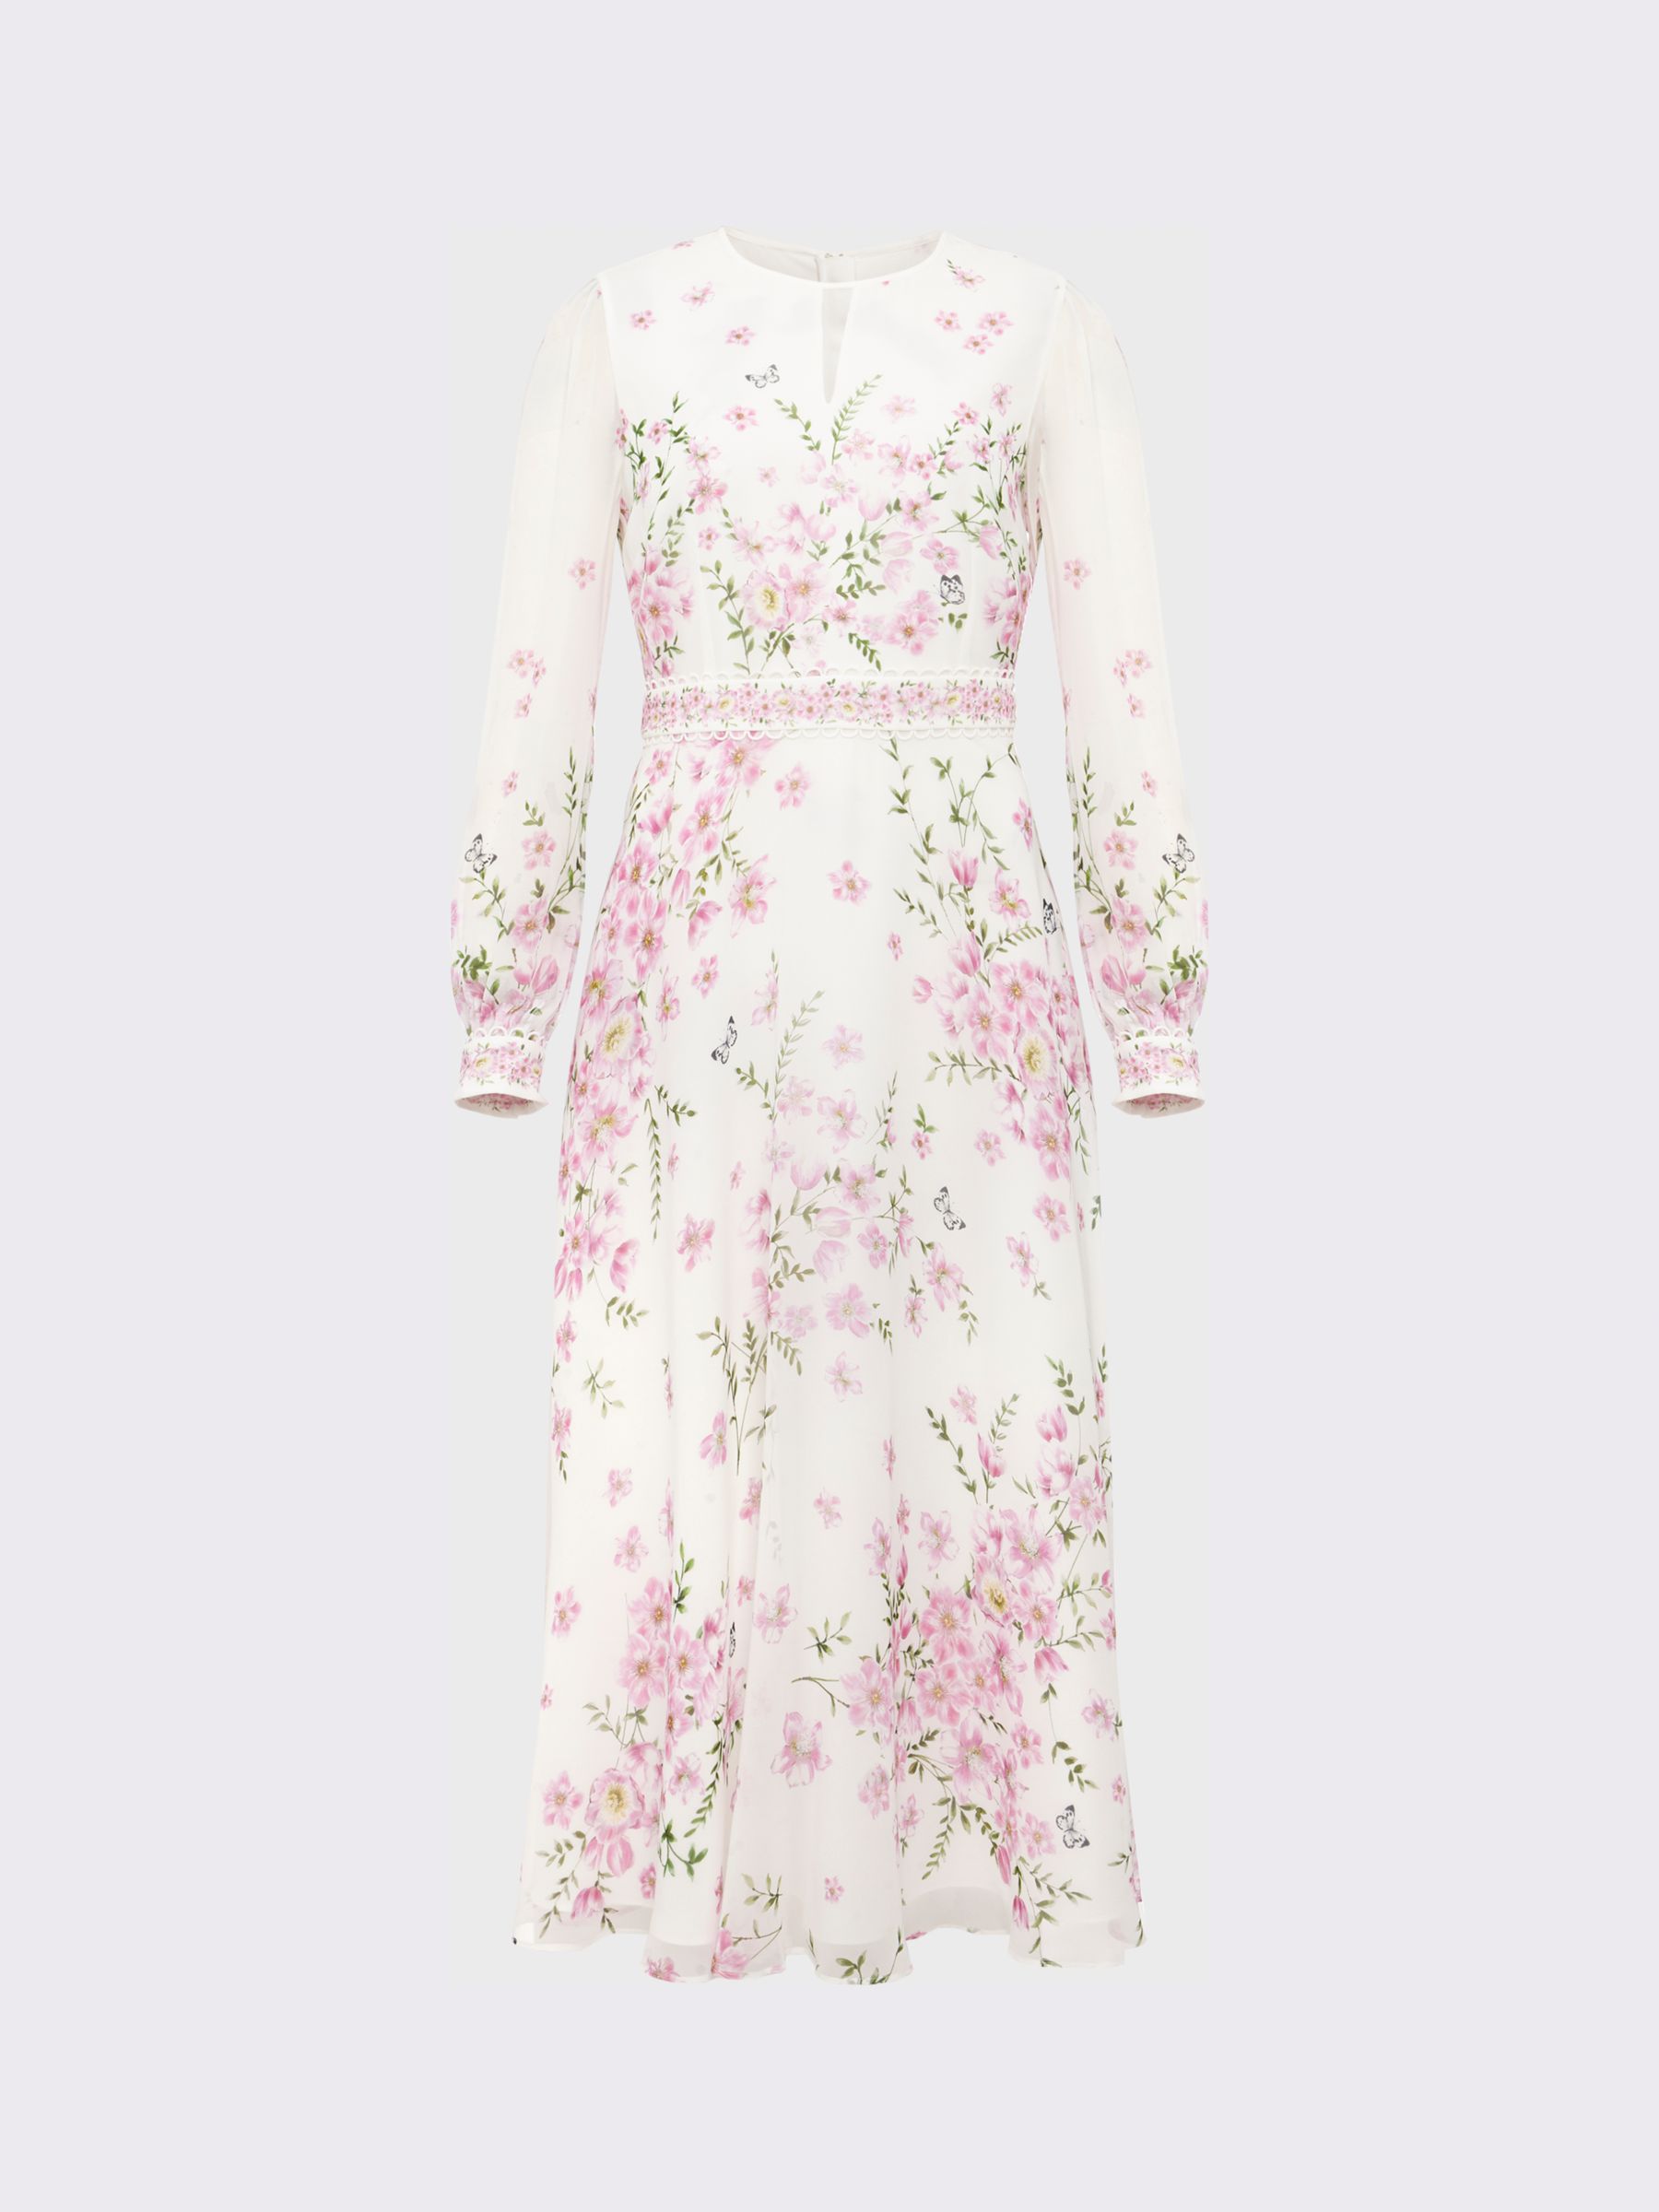 Hobbs Petite Skye Floral Print Silk Midi Dress, Ivory/Multi, 12